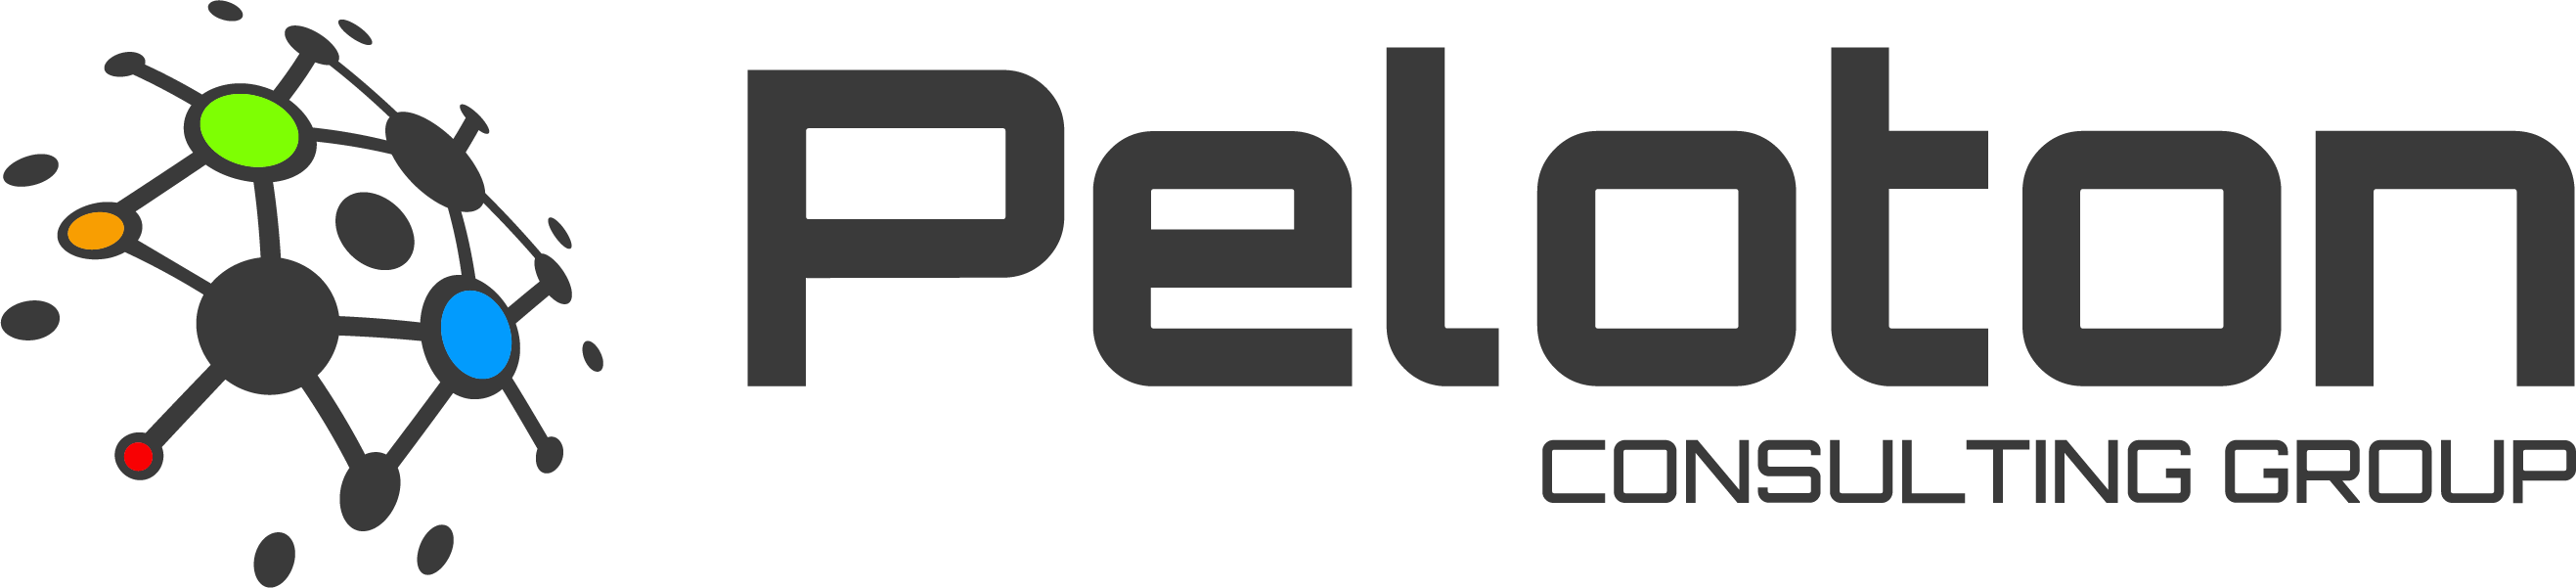 Peloton Logo - Peloton Consulting Group launches new brand and logo - Peloton ...